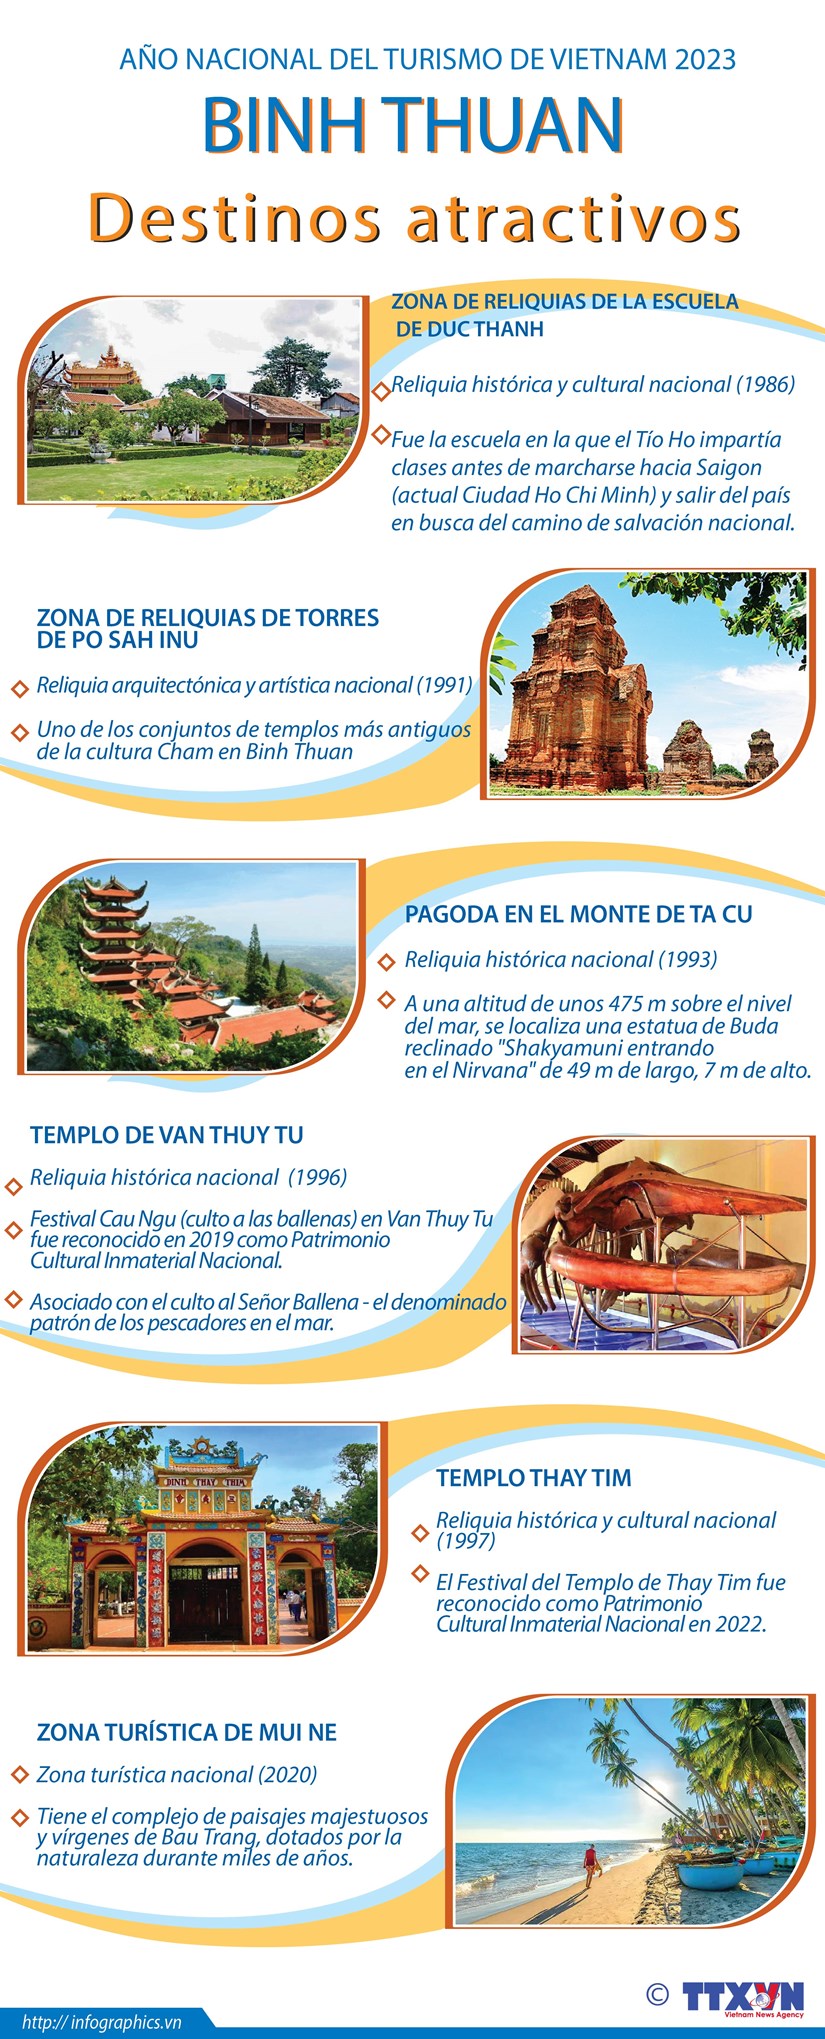 Ano Nacional del Turismo 2023 en provincia vietnamita de Binh Thuan hinh anh 1